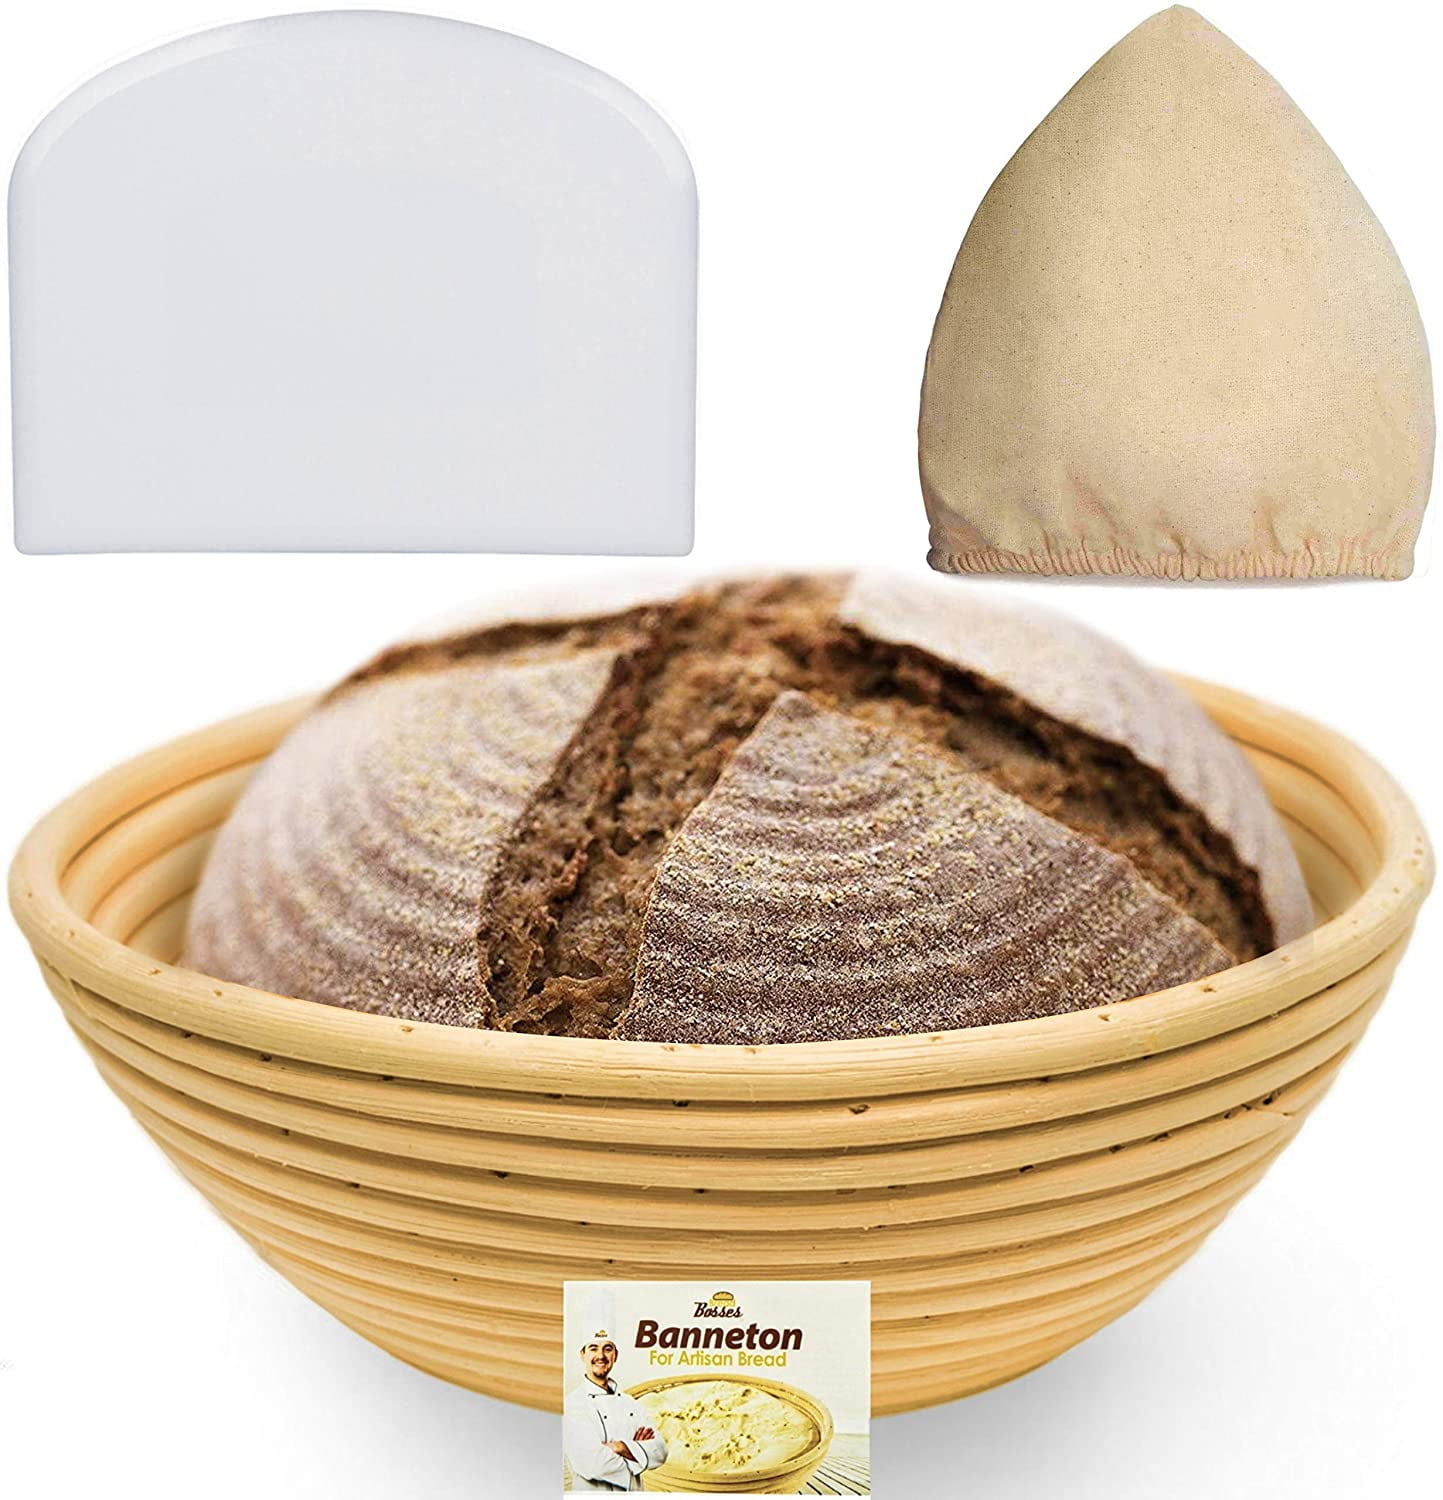 KIT 10 Inch Bread Basket Sourdough Starter Bread Lame Liner & FREE EBOOK Bread Proofing Basket for Bread Baking Supplies Bread Making Tools Banneton Proofing Basket Dough Scraper 